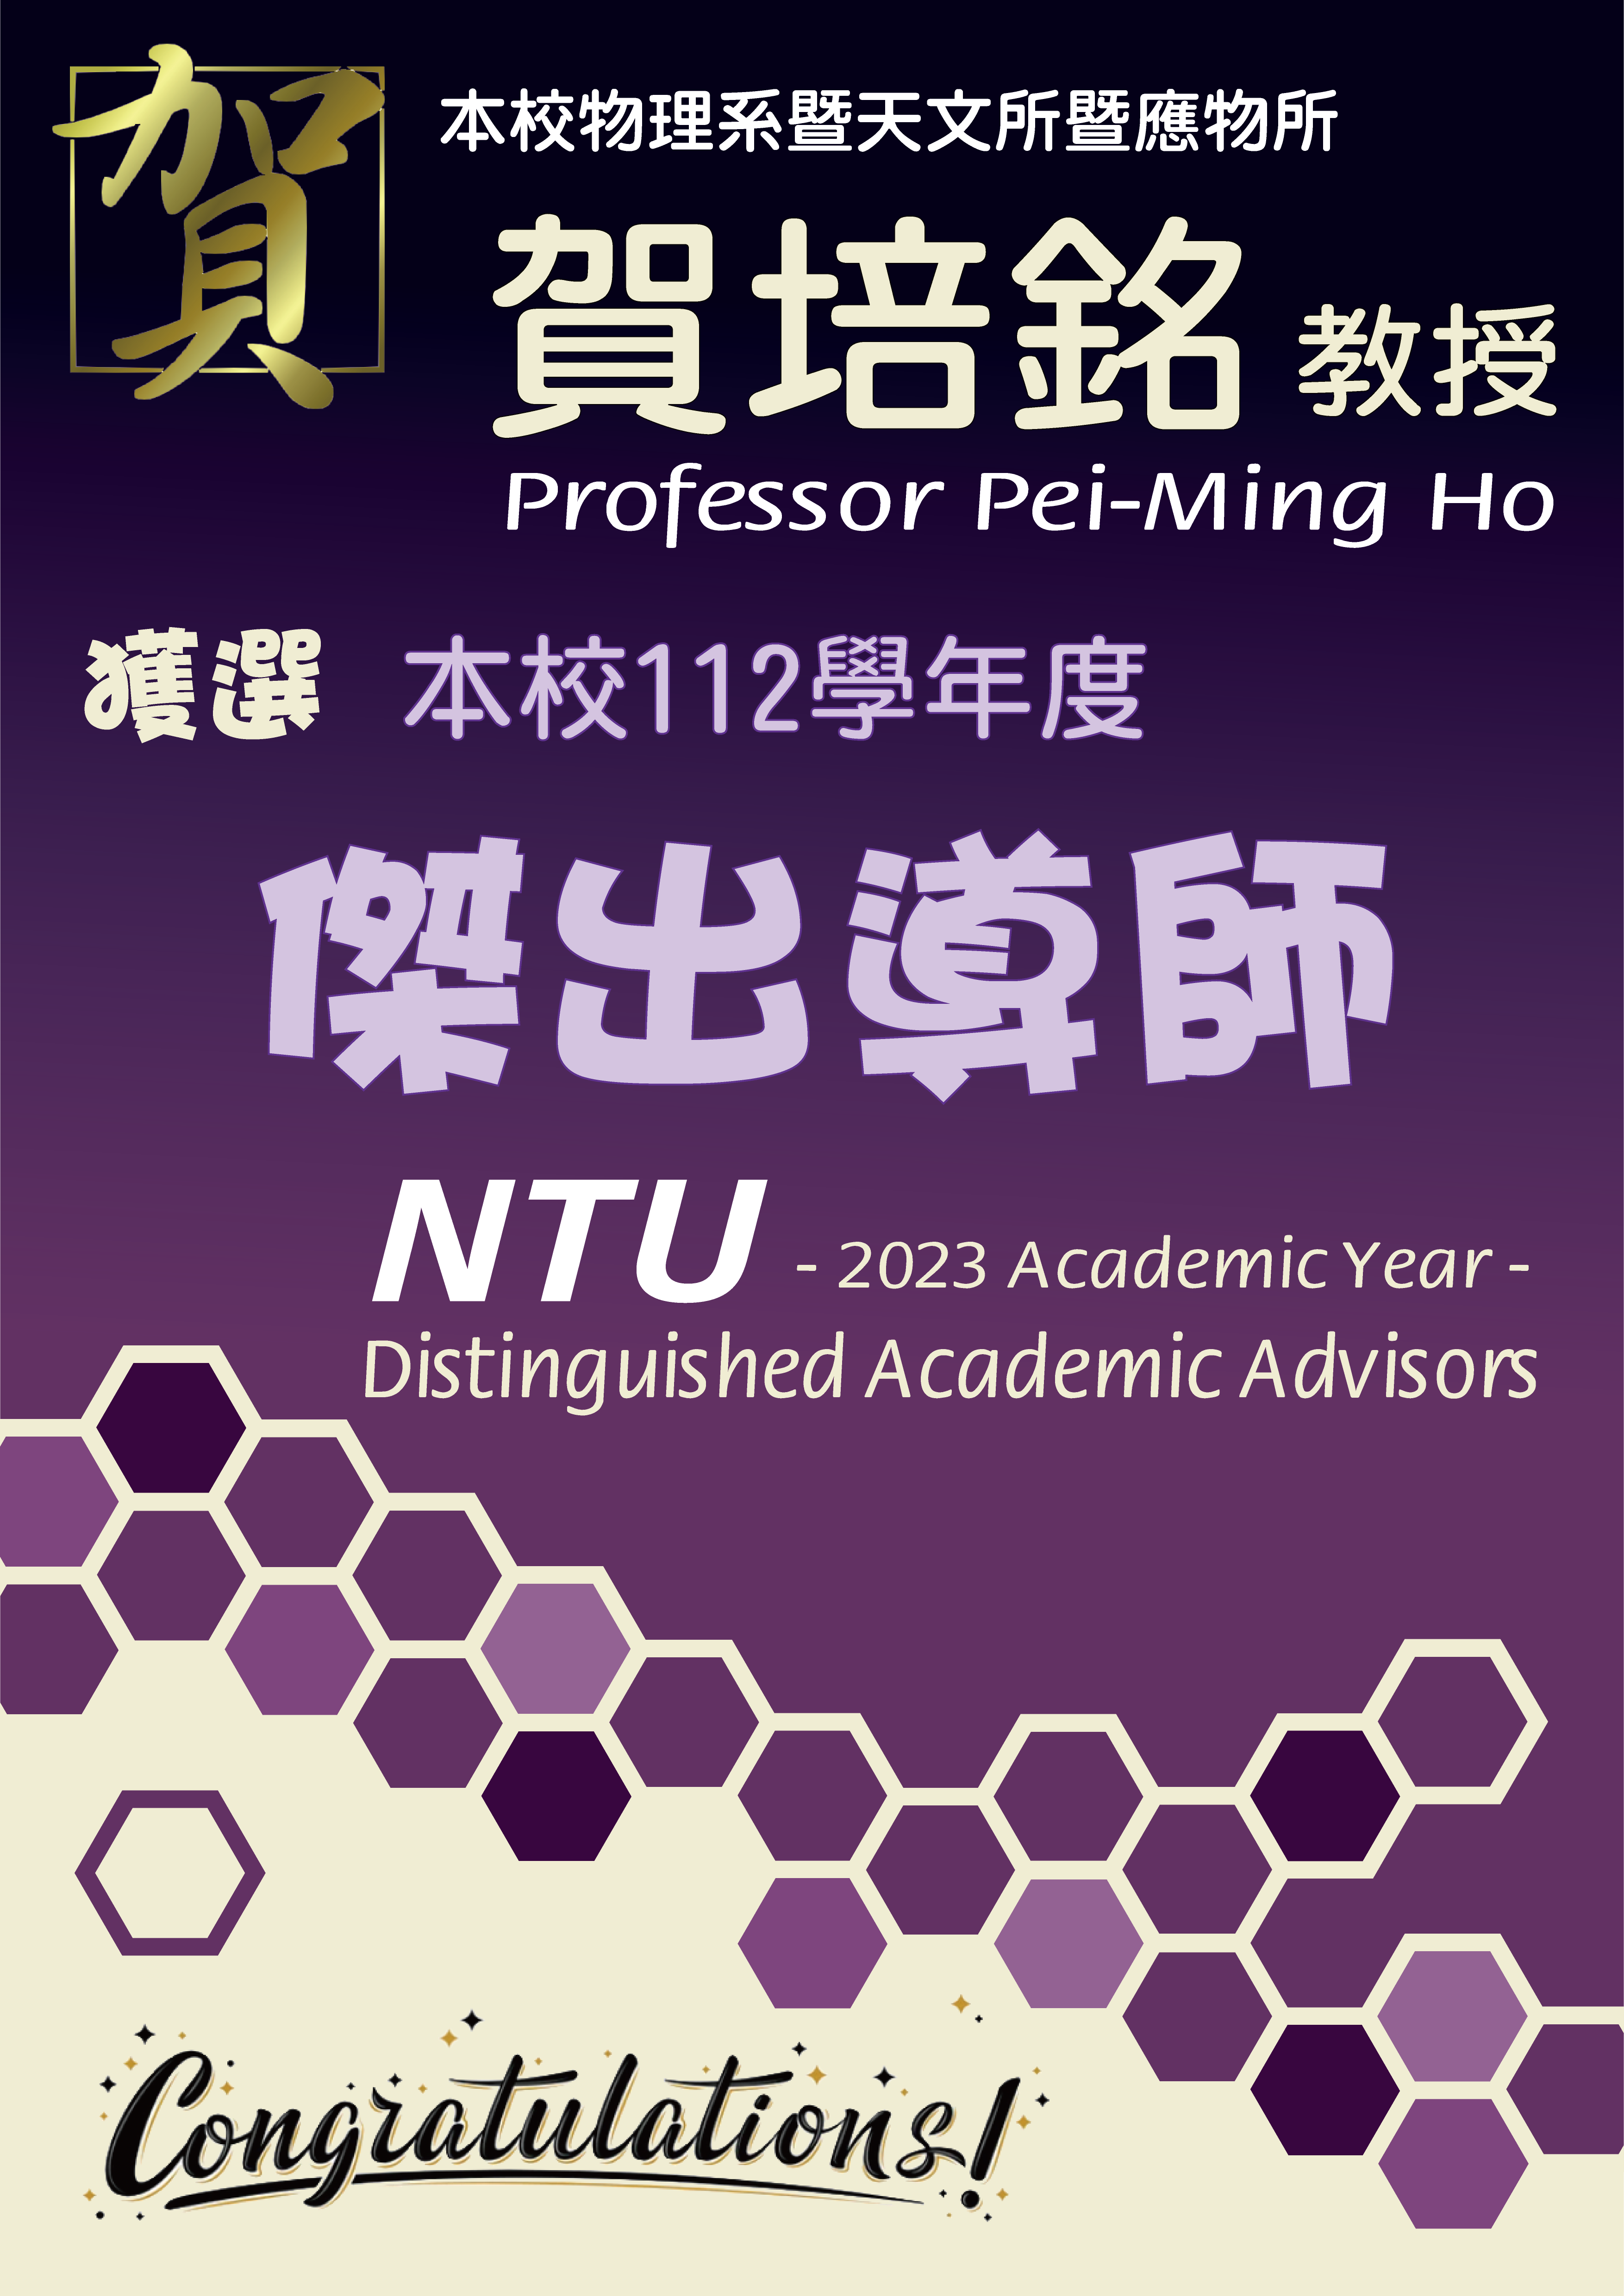 《賀》本系 賀培銘 教授 Prof. Pei-Ming Ho 獲選 112學年度《傑出導師》(NTU Distinguished Academic Advisors)